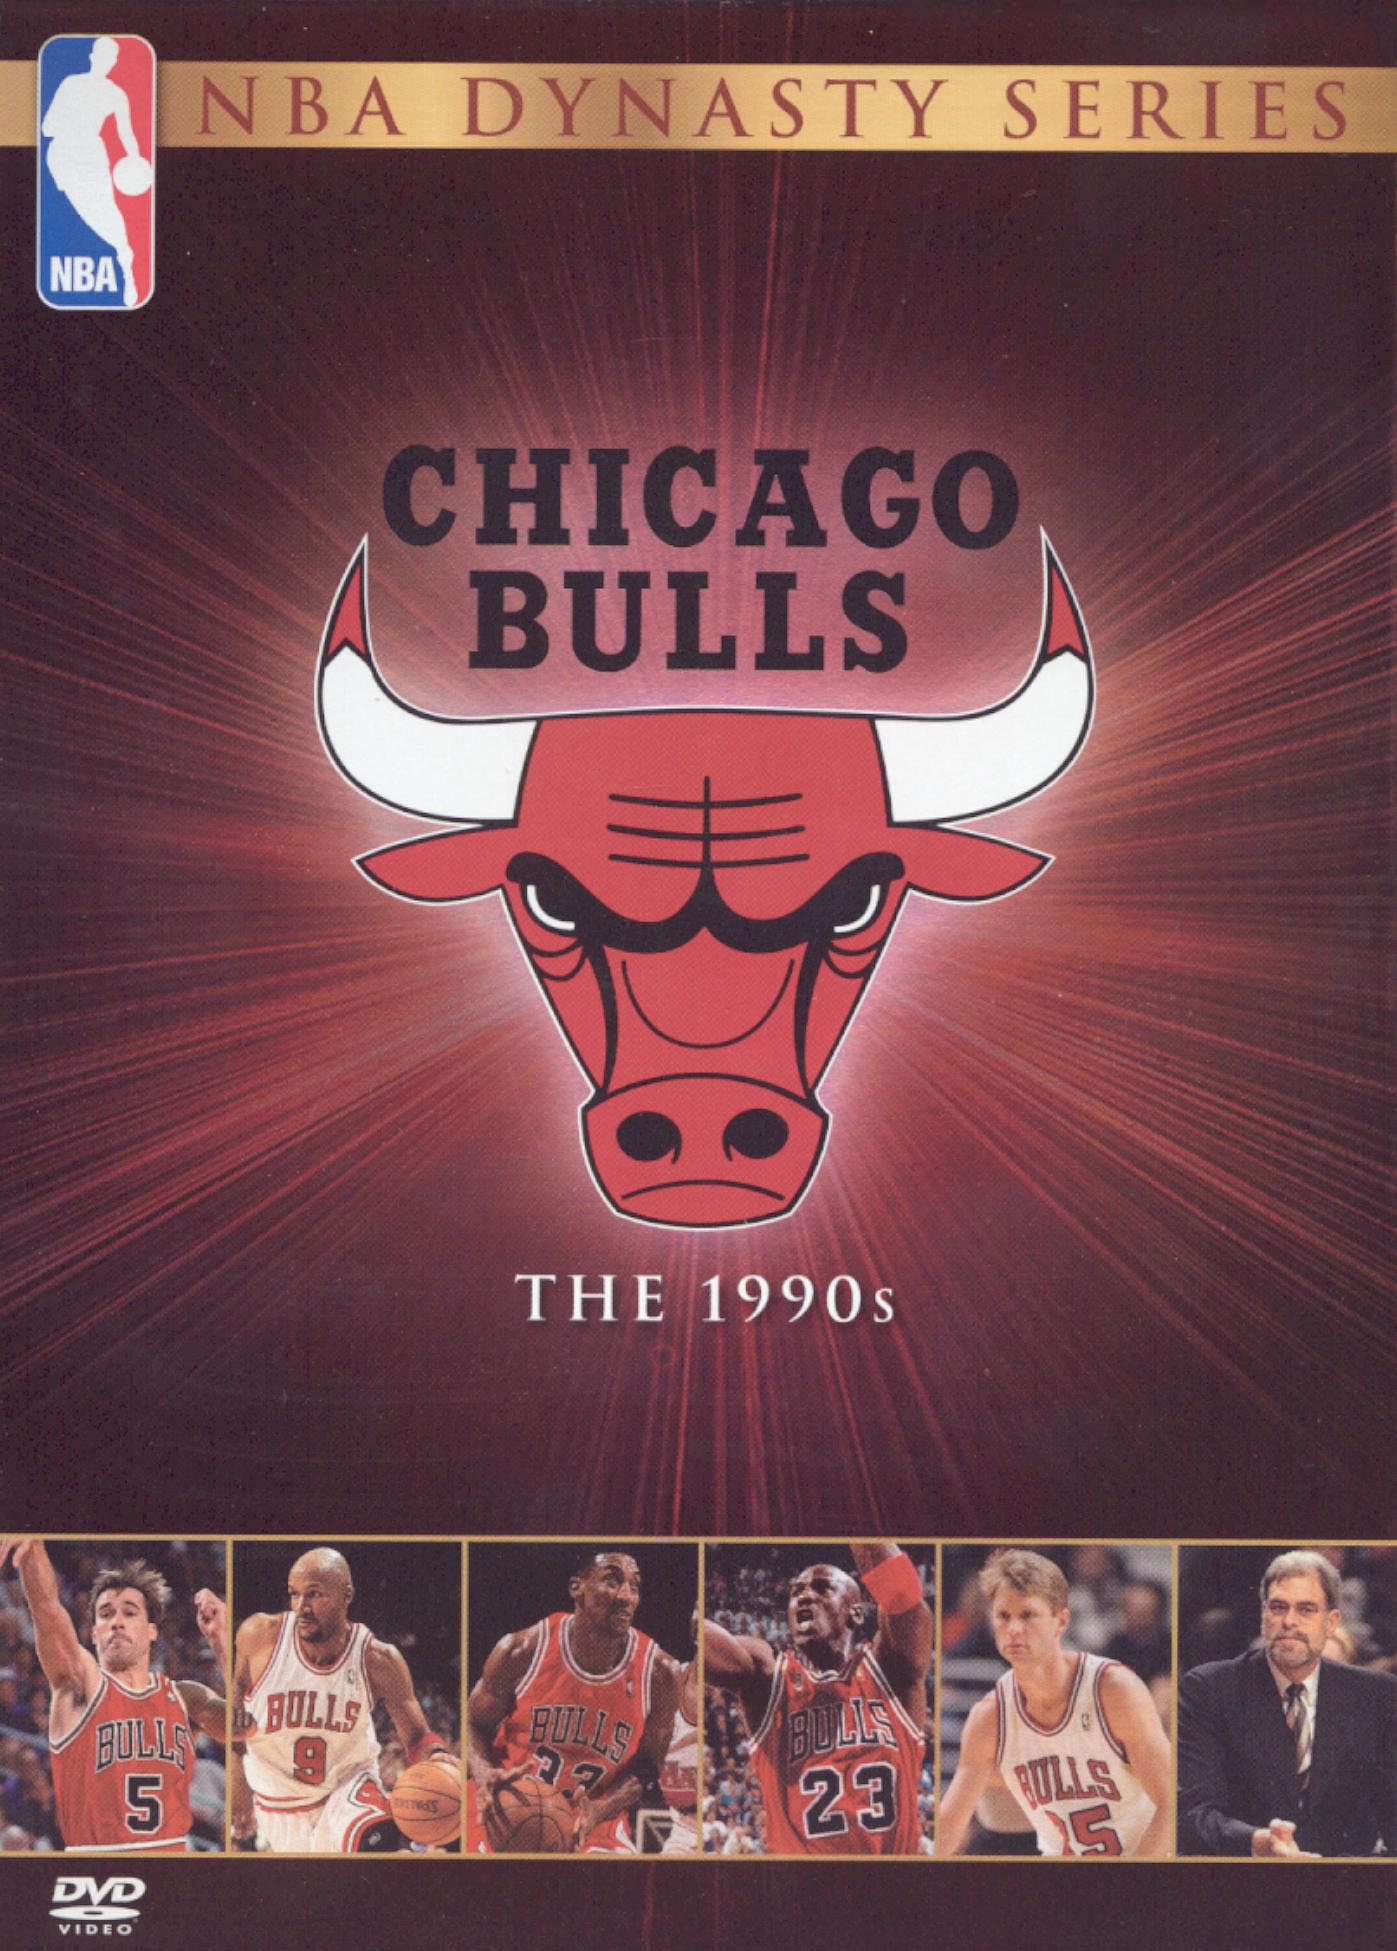 Best Buy: NBA Dynasty Series: Chicago Bulls The 1990s [4 Discs] [DVD]